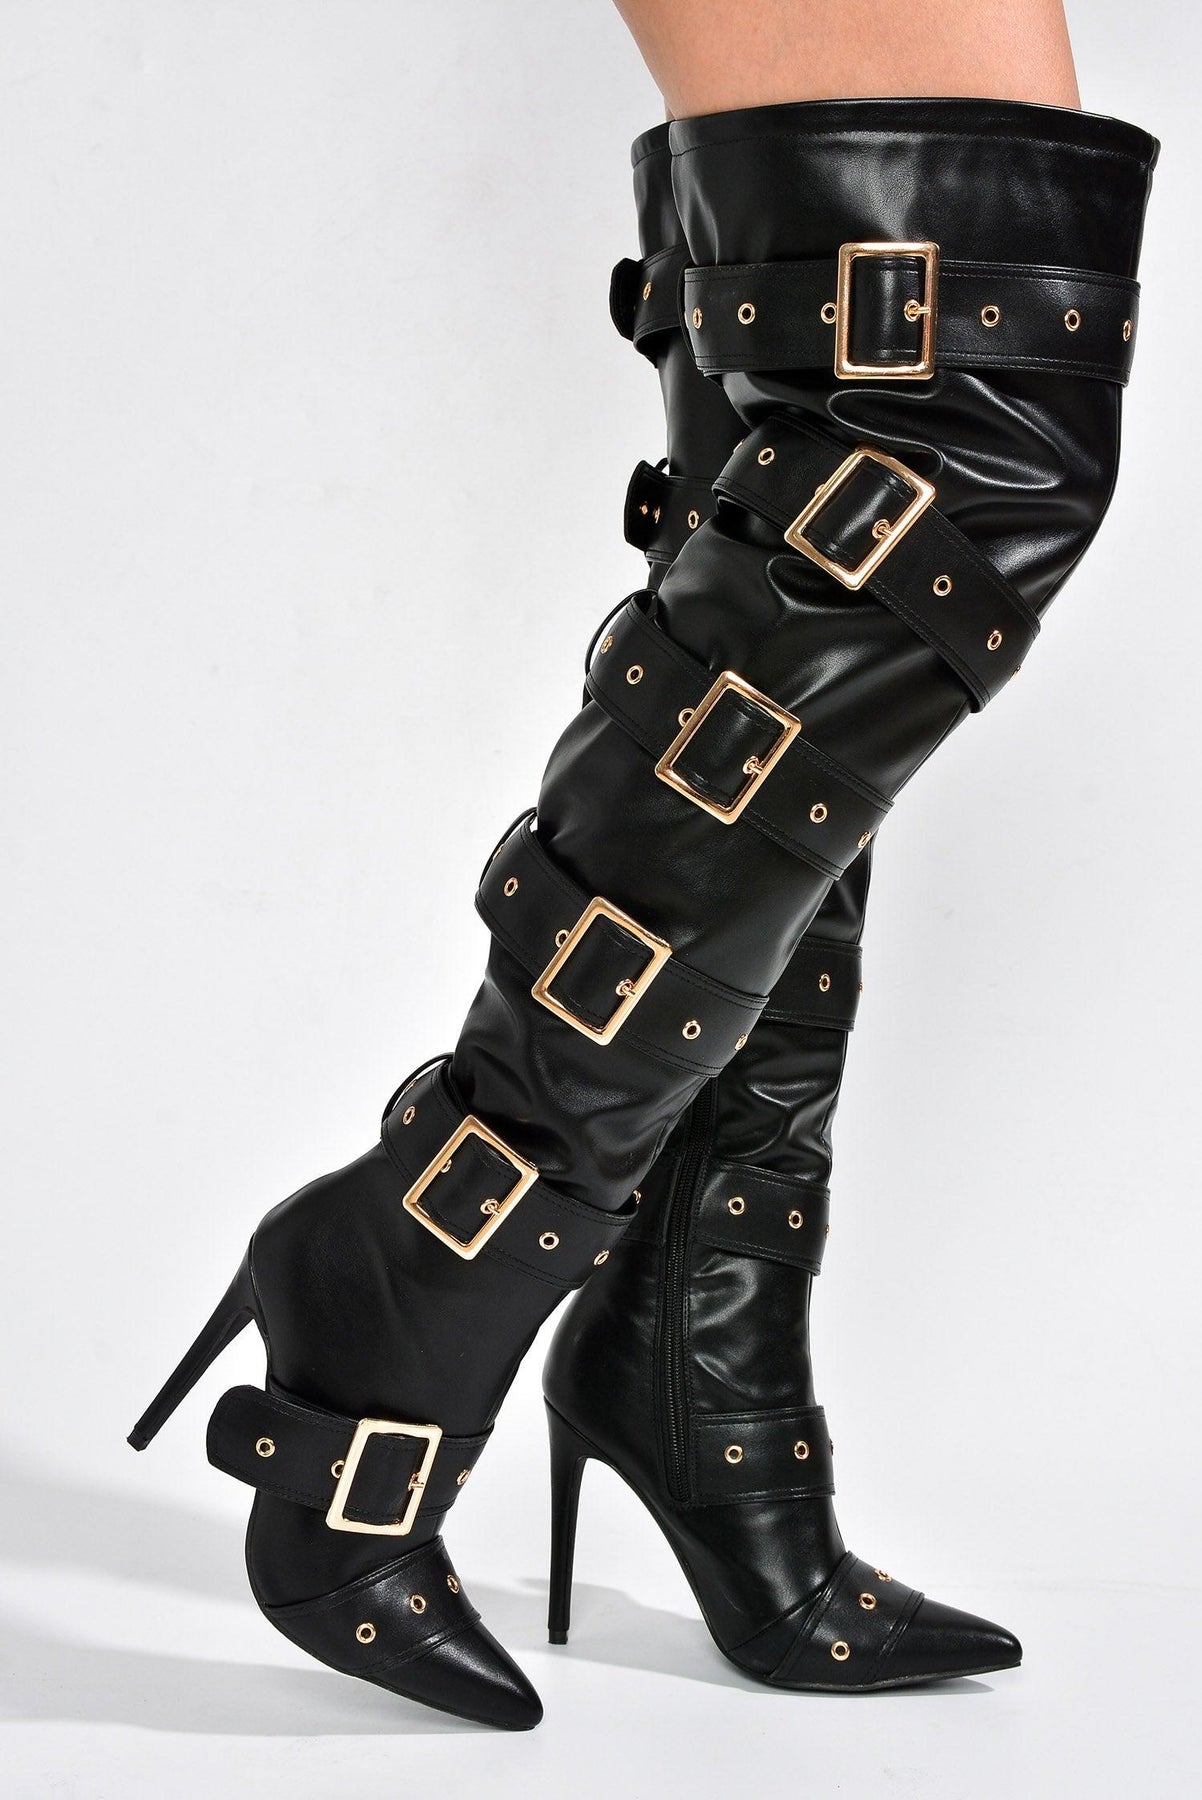 ASMARA - BLACK Thigh High Boots – AMIClubwear